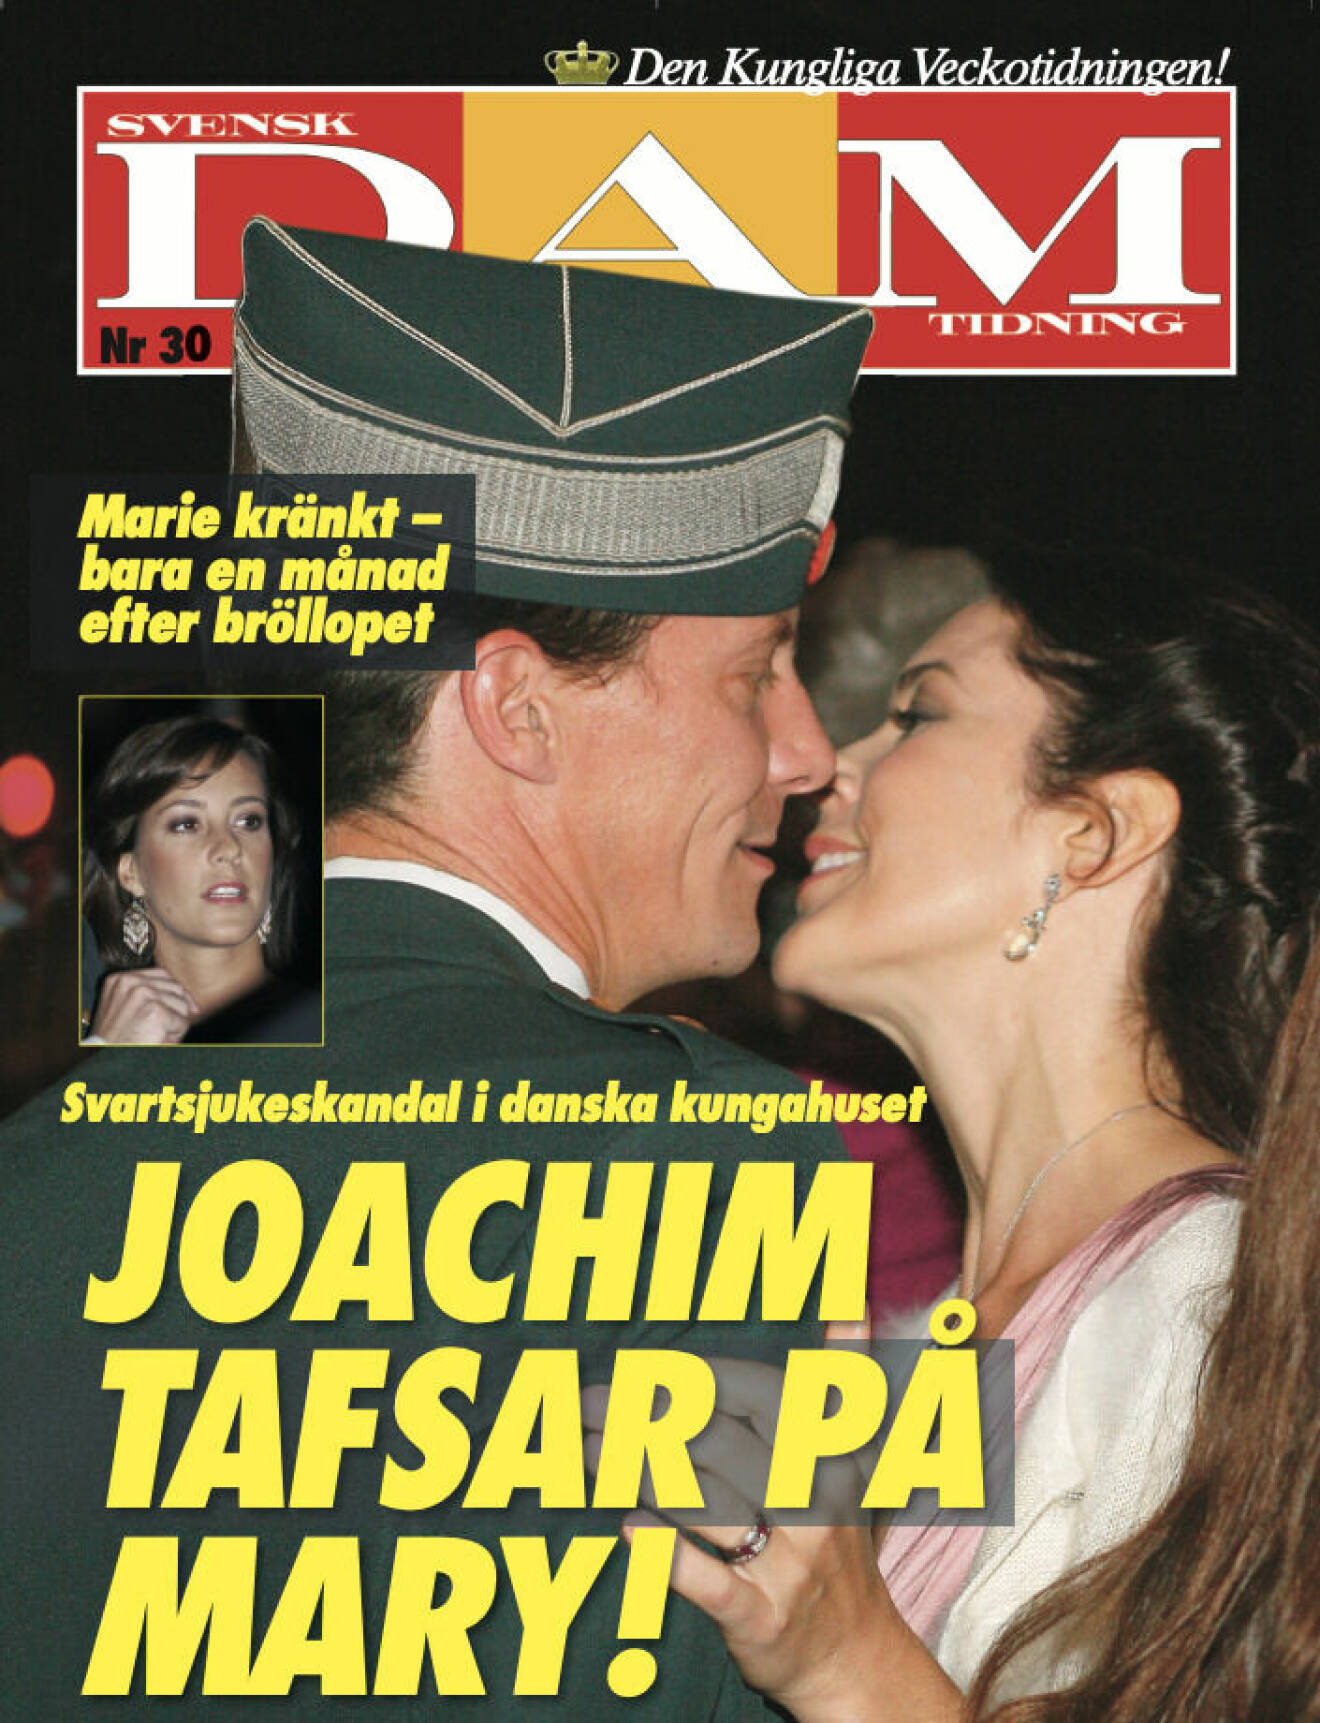 Prins Joachim och kronprinsessan Mary